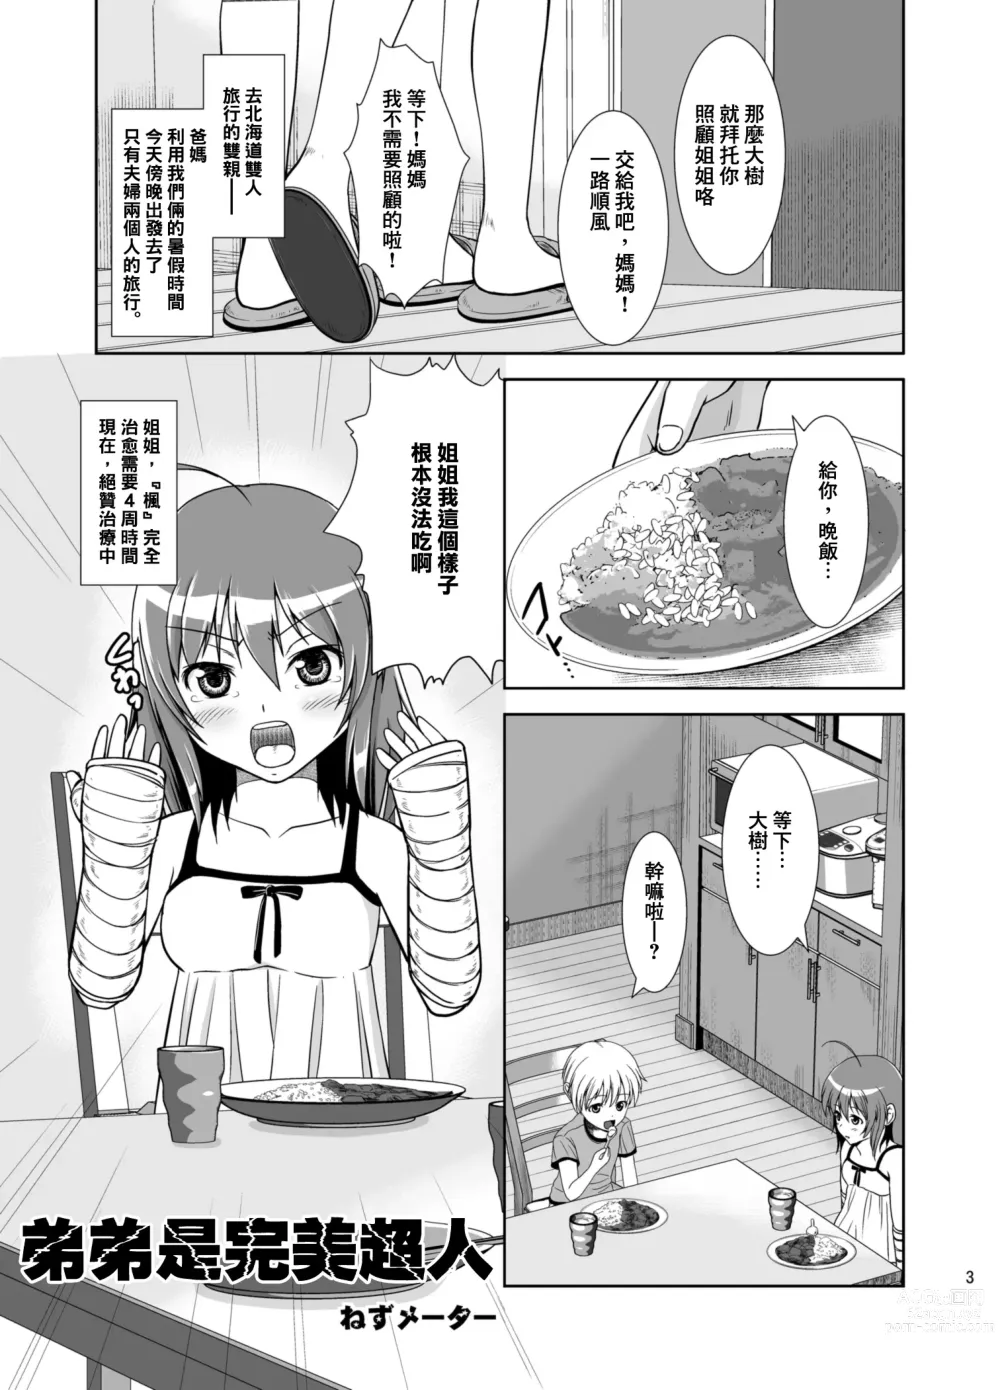 Page 5 of doujinshi Petit Sca 8